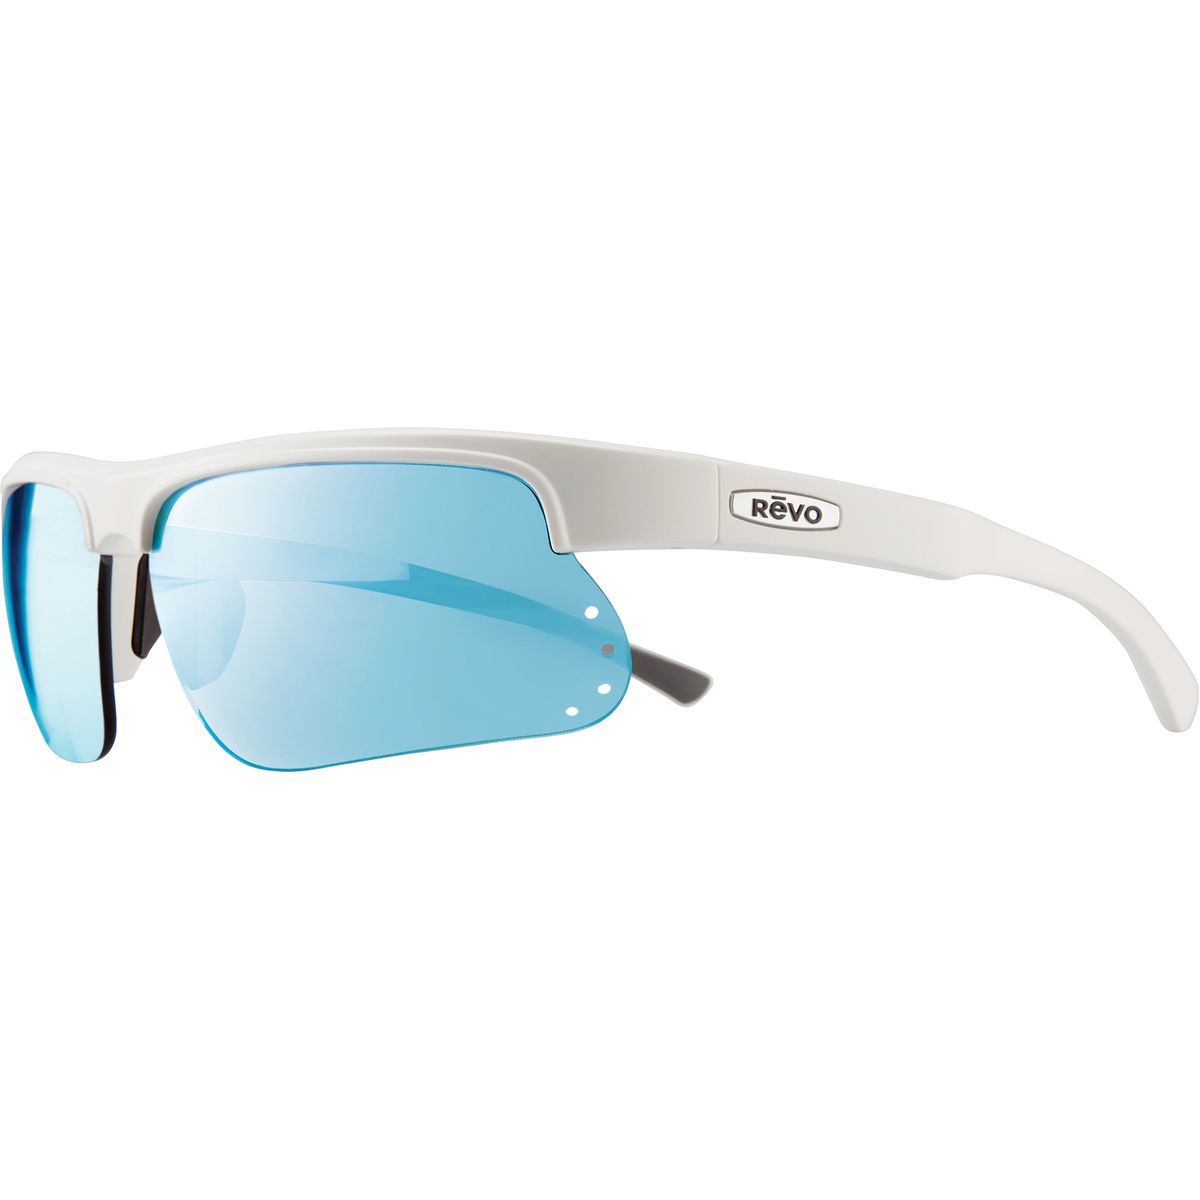 Revo Cusp S Polarized Sunglasses - Men's